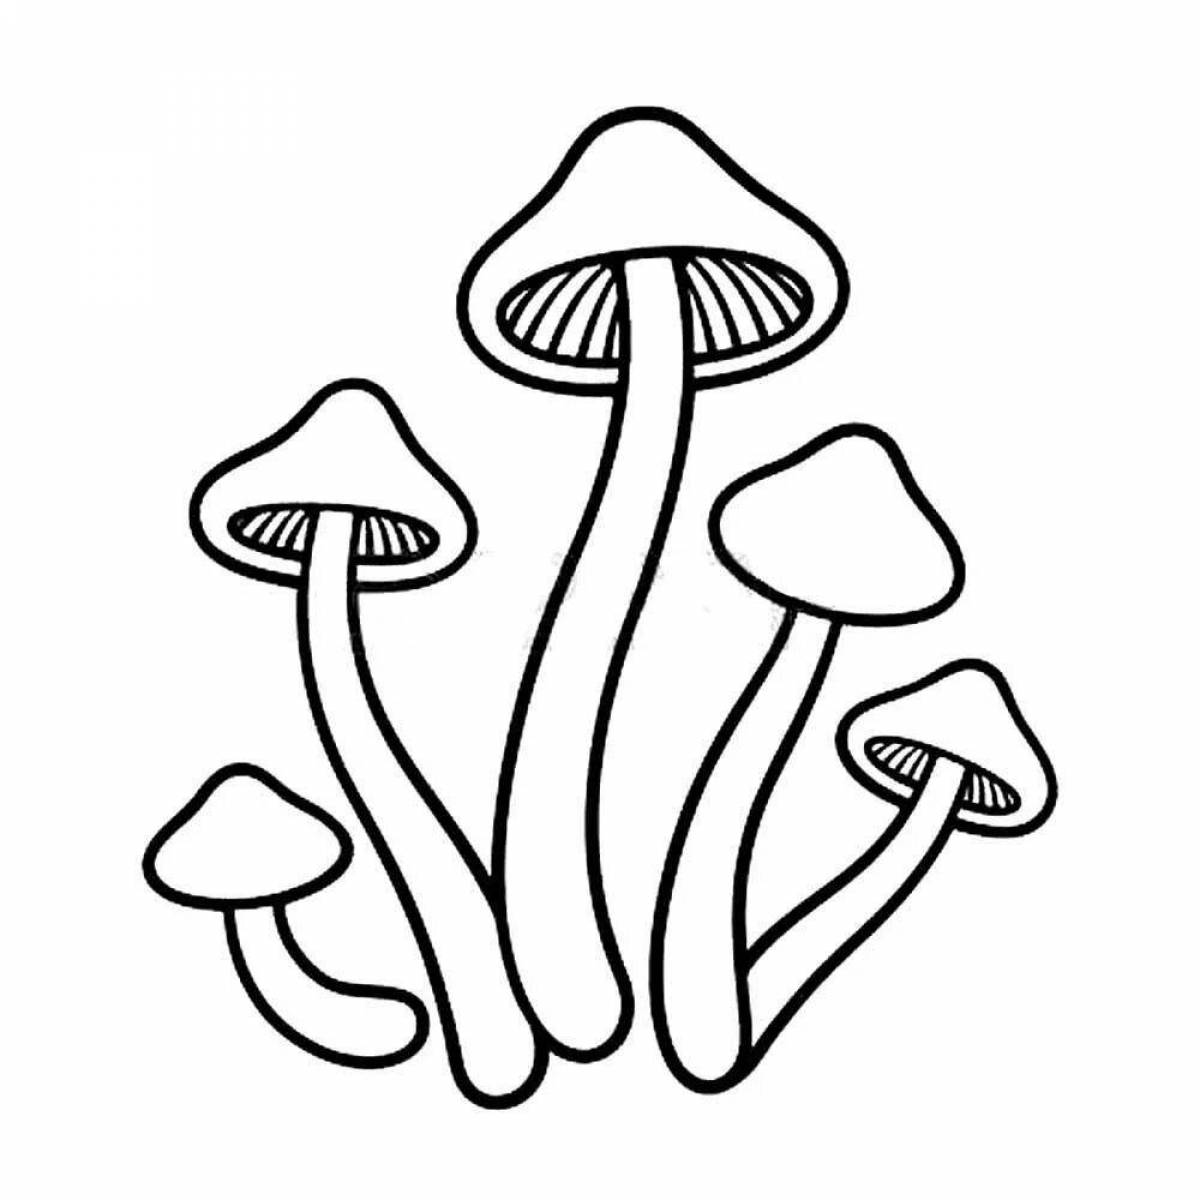 Joyful honey mushroom coloring page